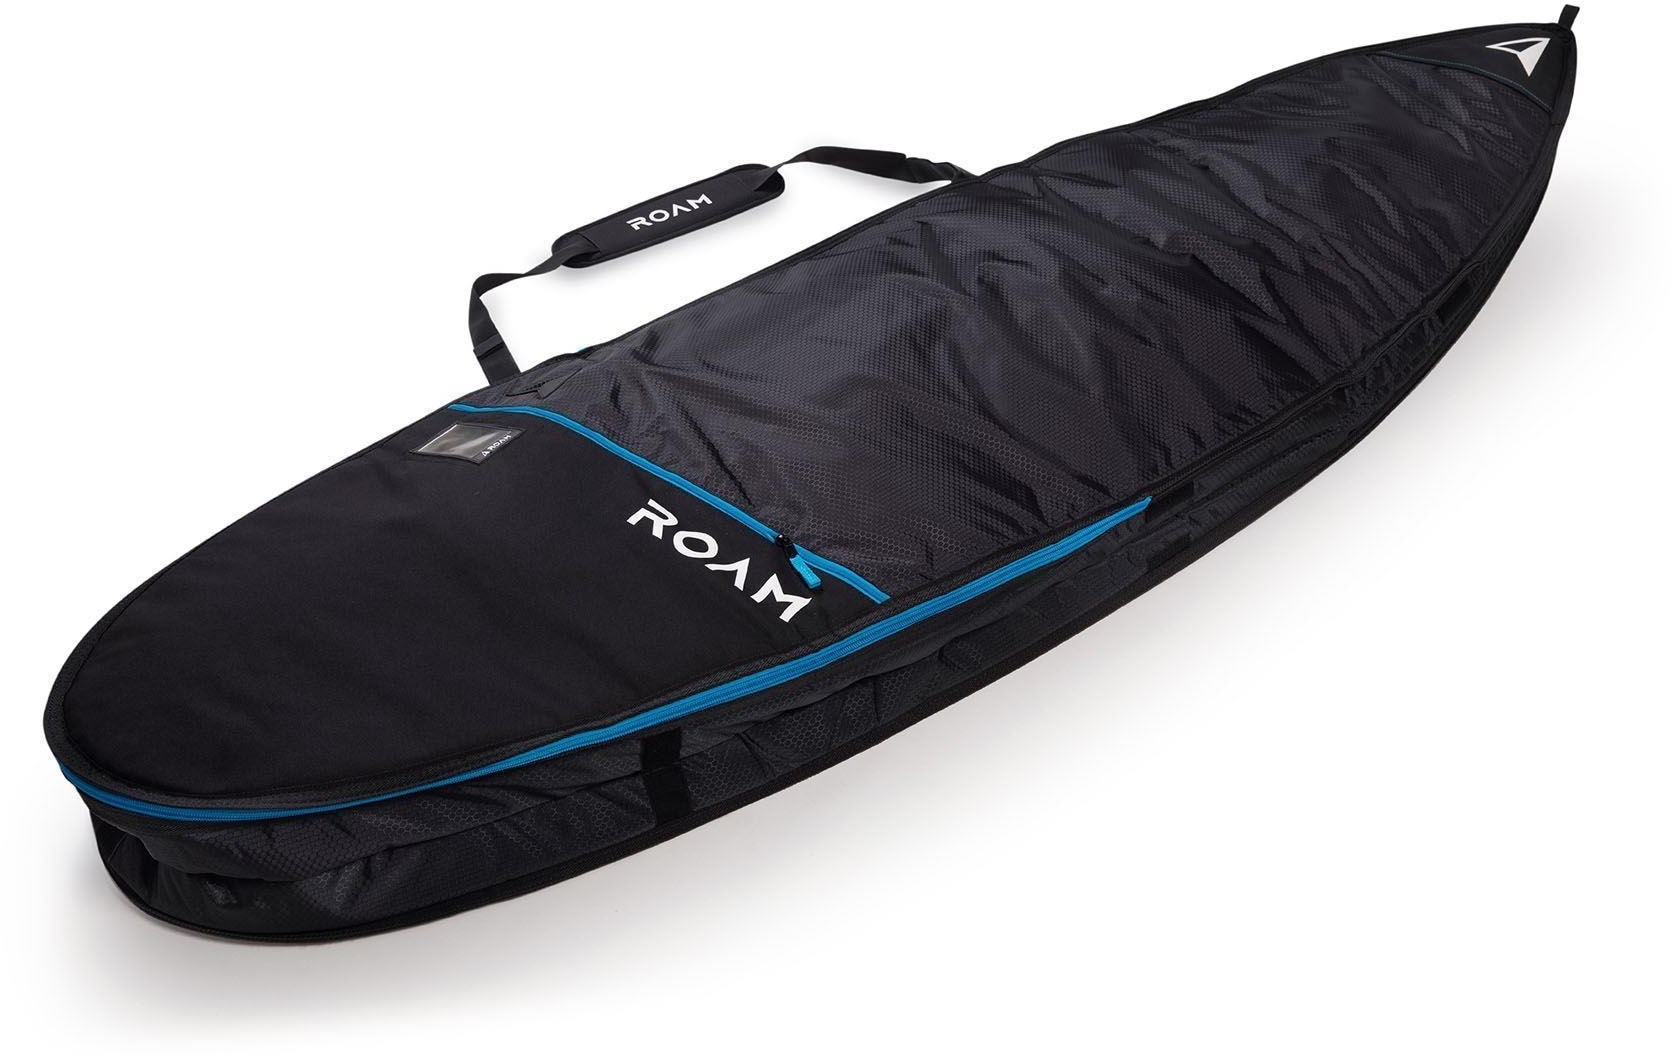 Roam Boardbag Surfboard Tech Bag Doppel Short bag travel reise, Länge in Fuß: 6.4, Breite in inch: 22.75